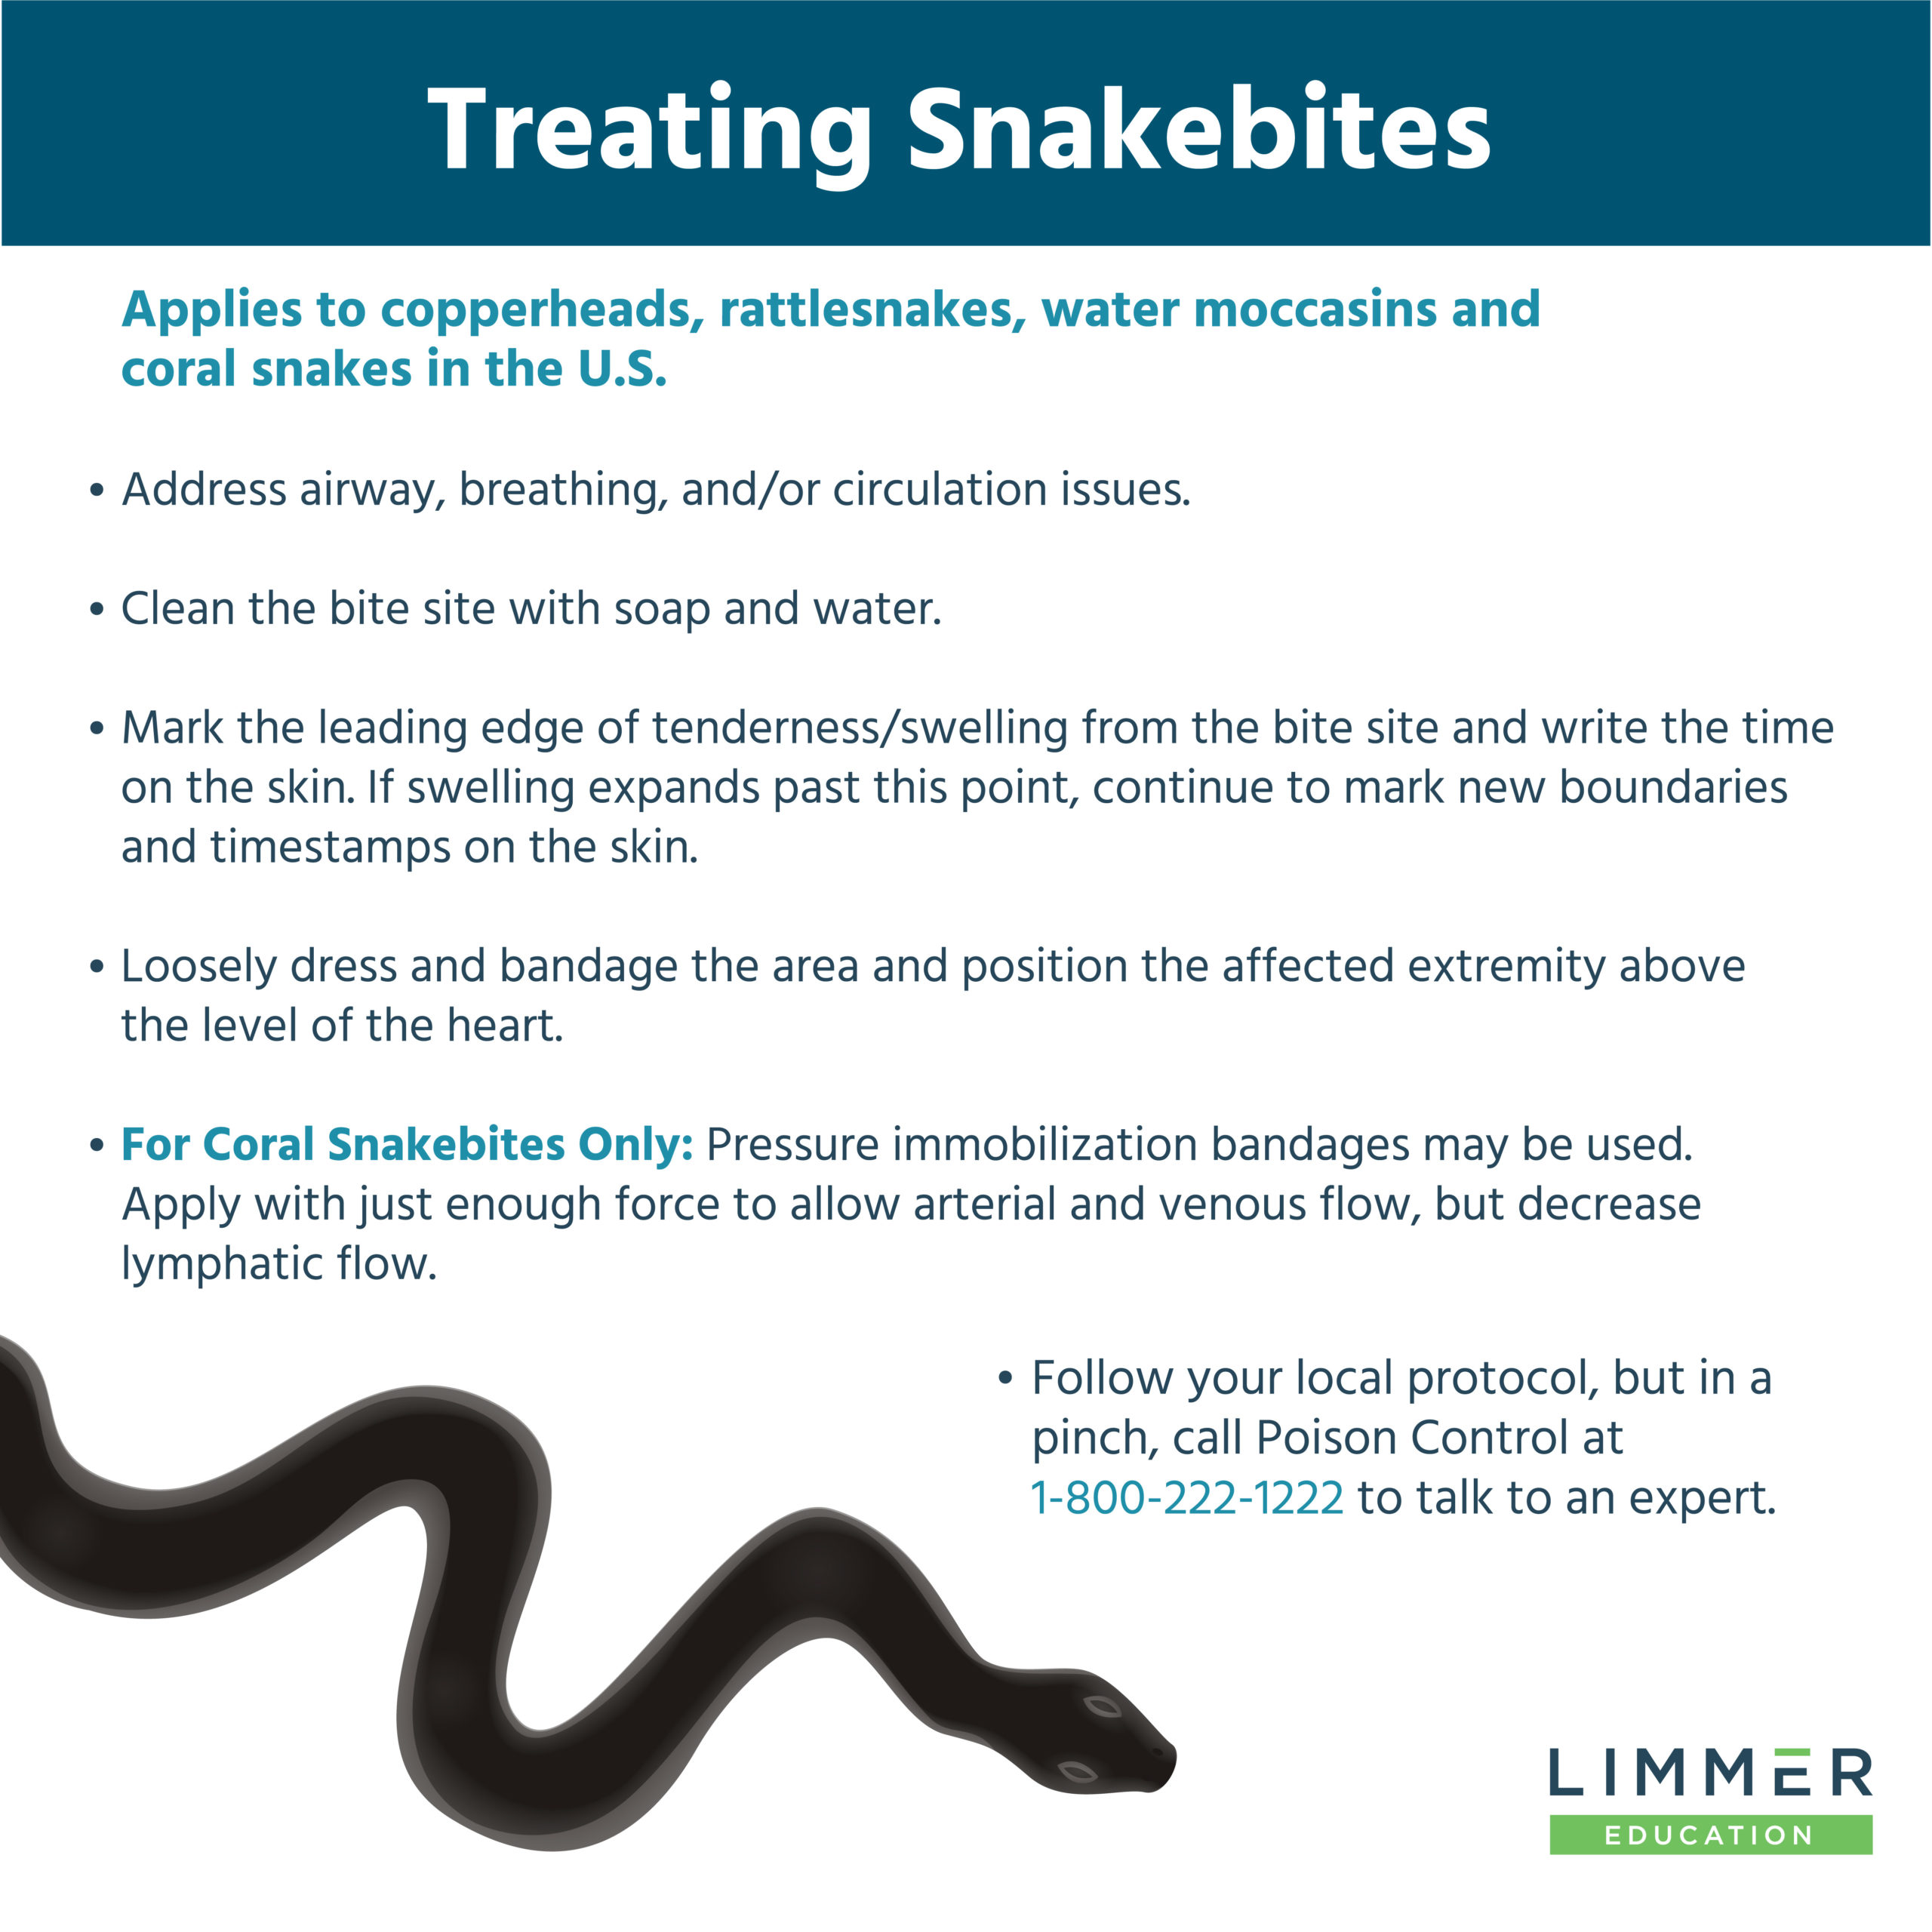 Snake bite treatment